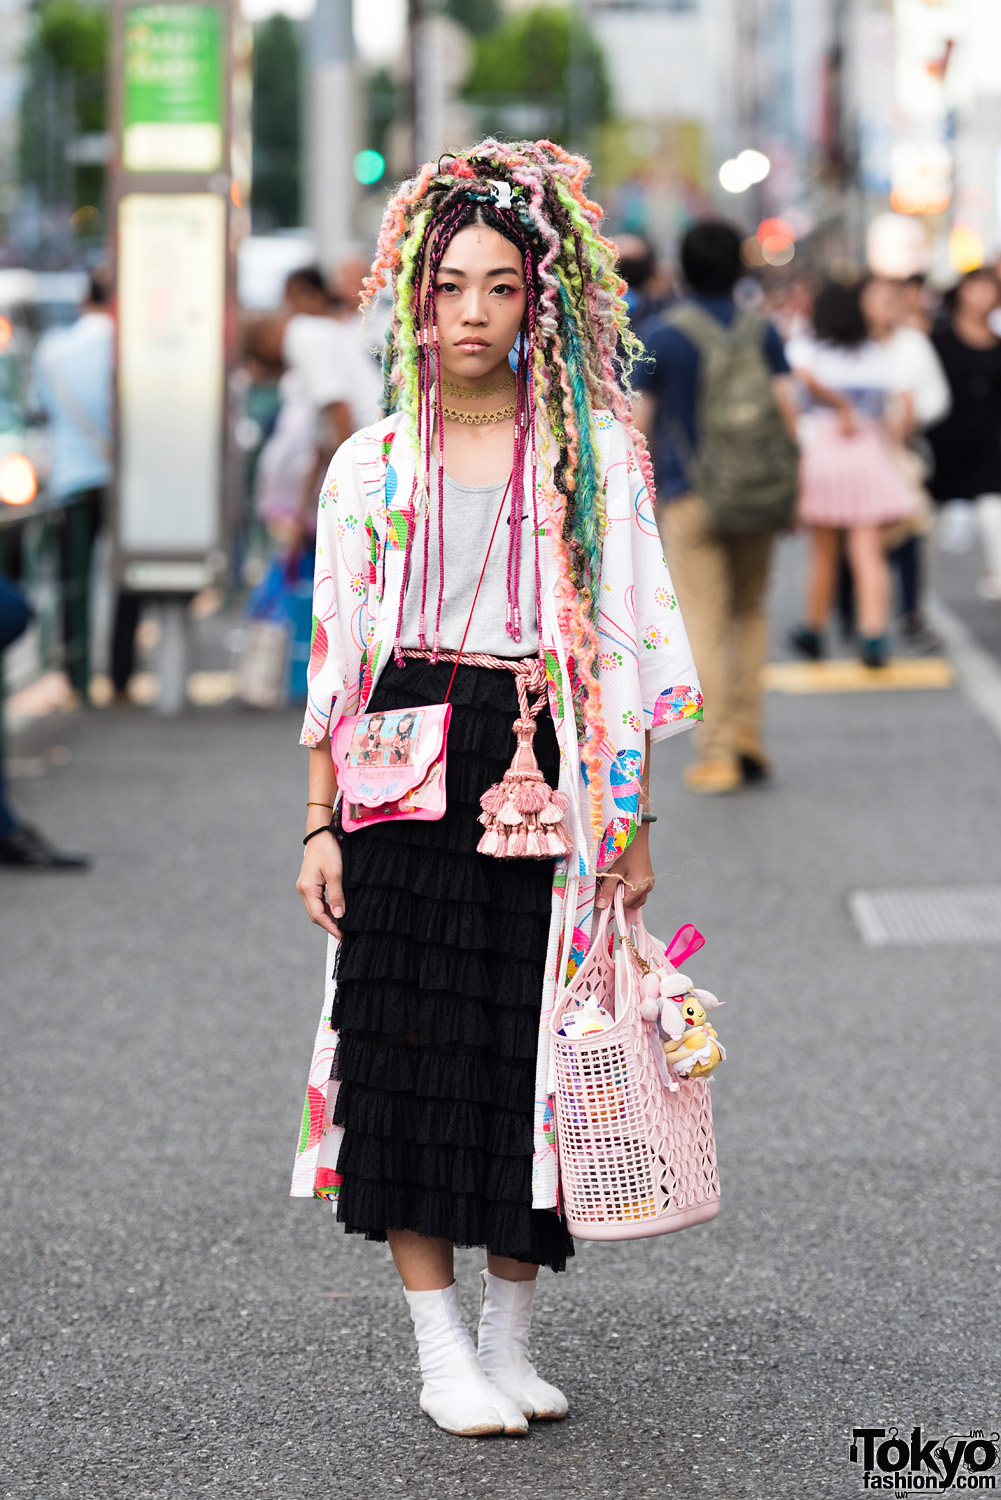 Yarn Designer Kelly Limerick in Harajuku w/ Kimono & Colorful Yarn Hair